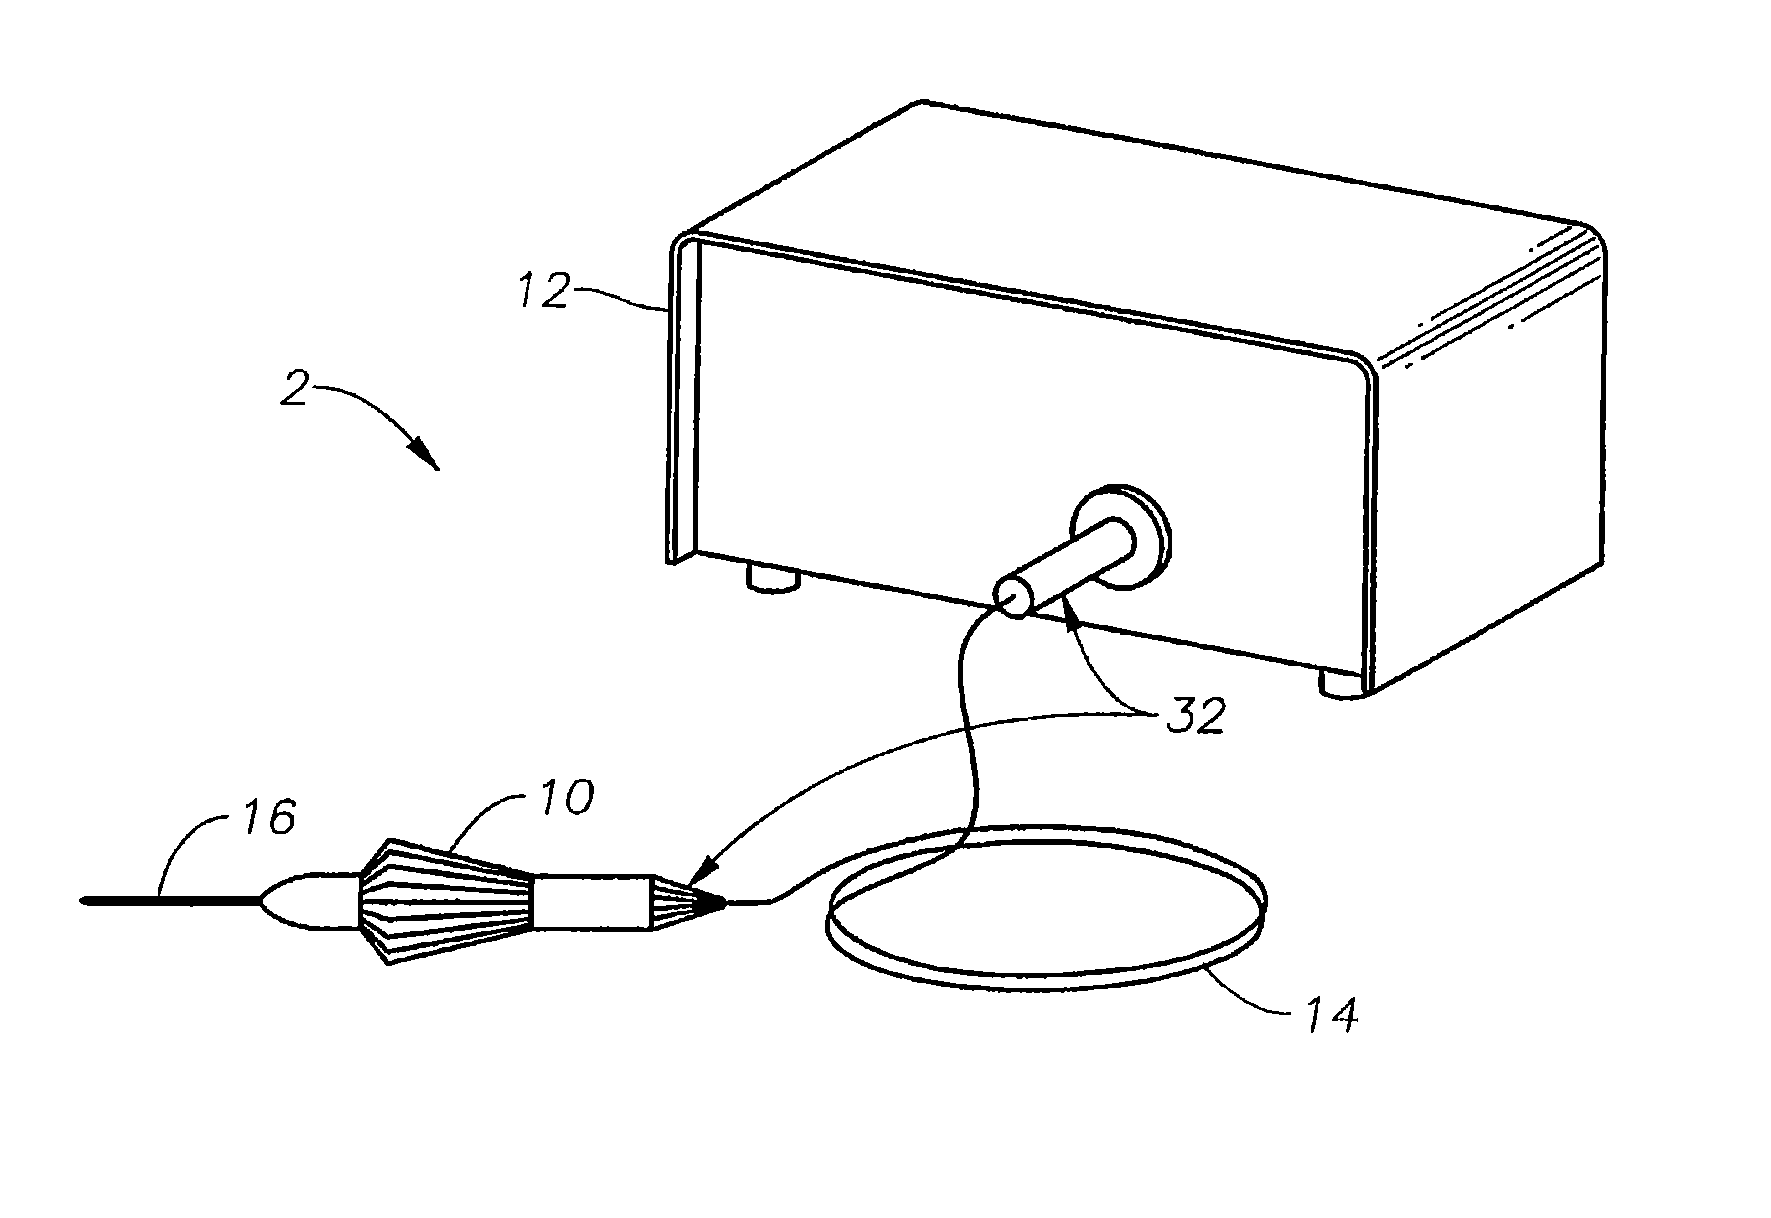 Extending small-gauge illuminator